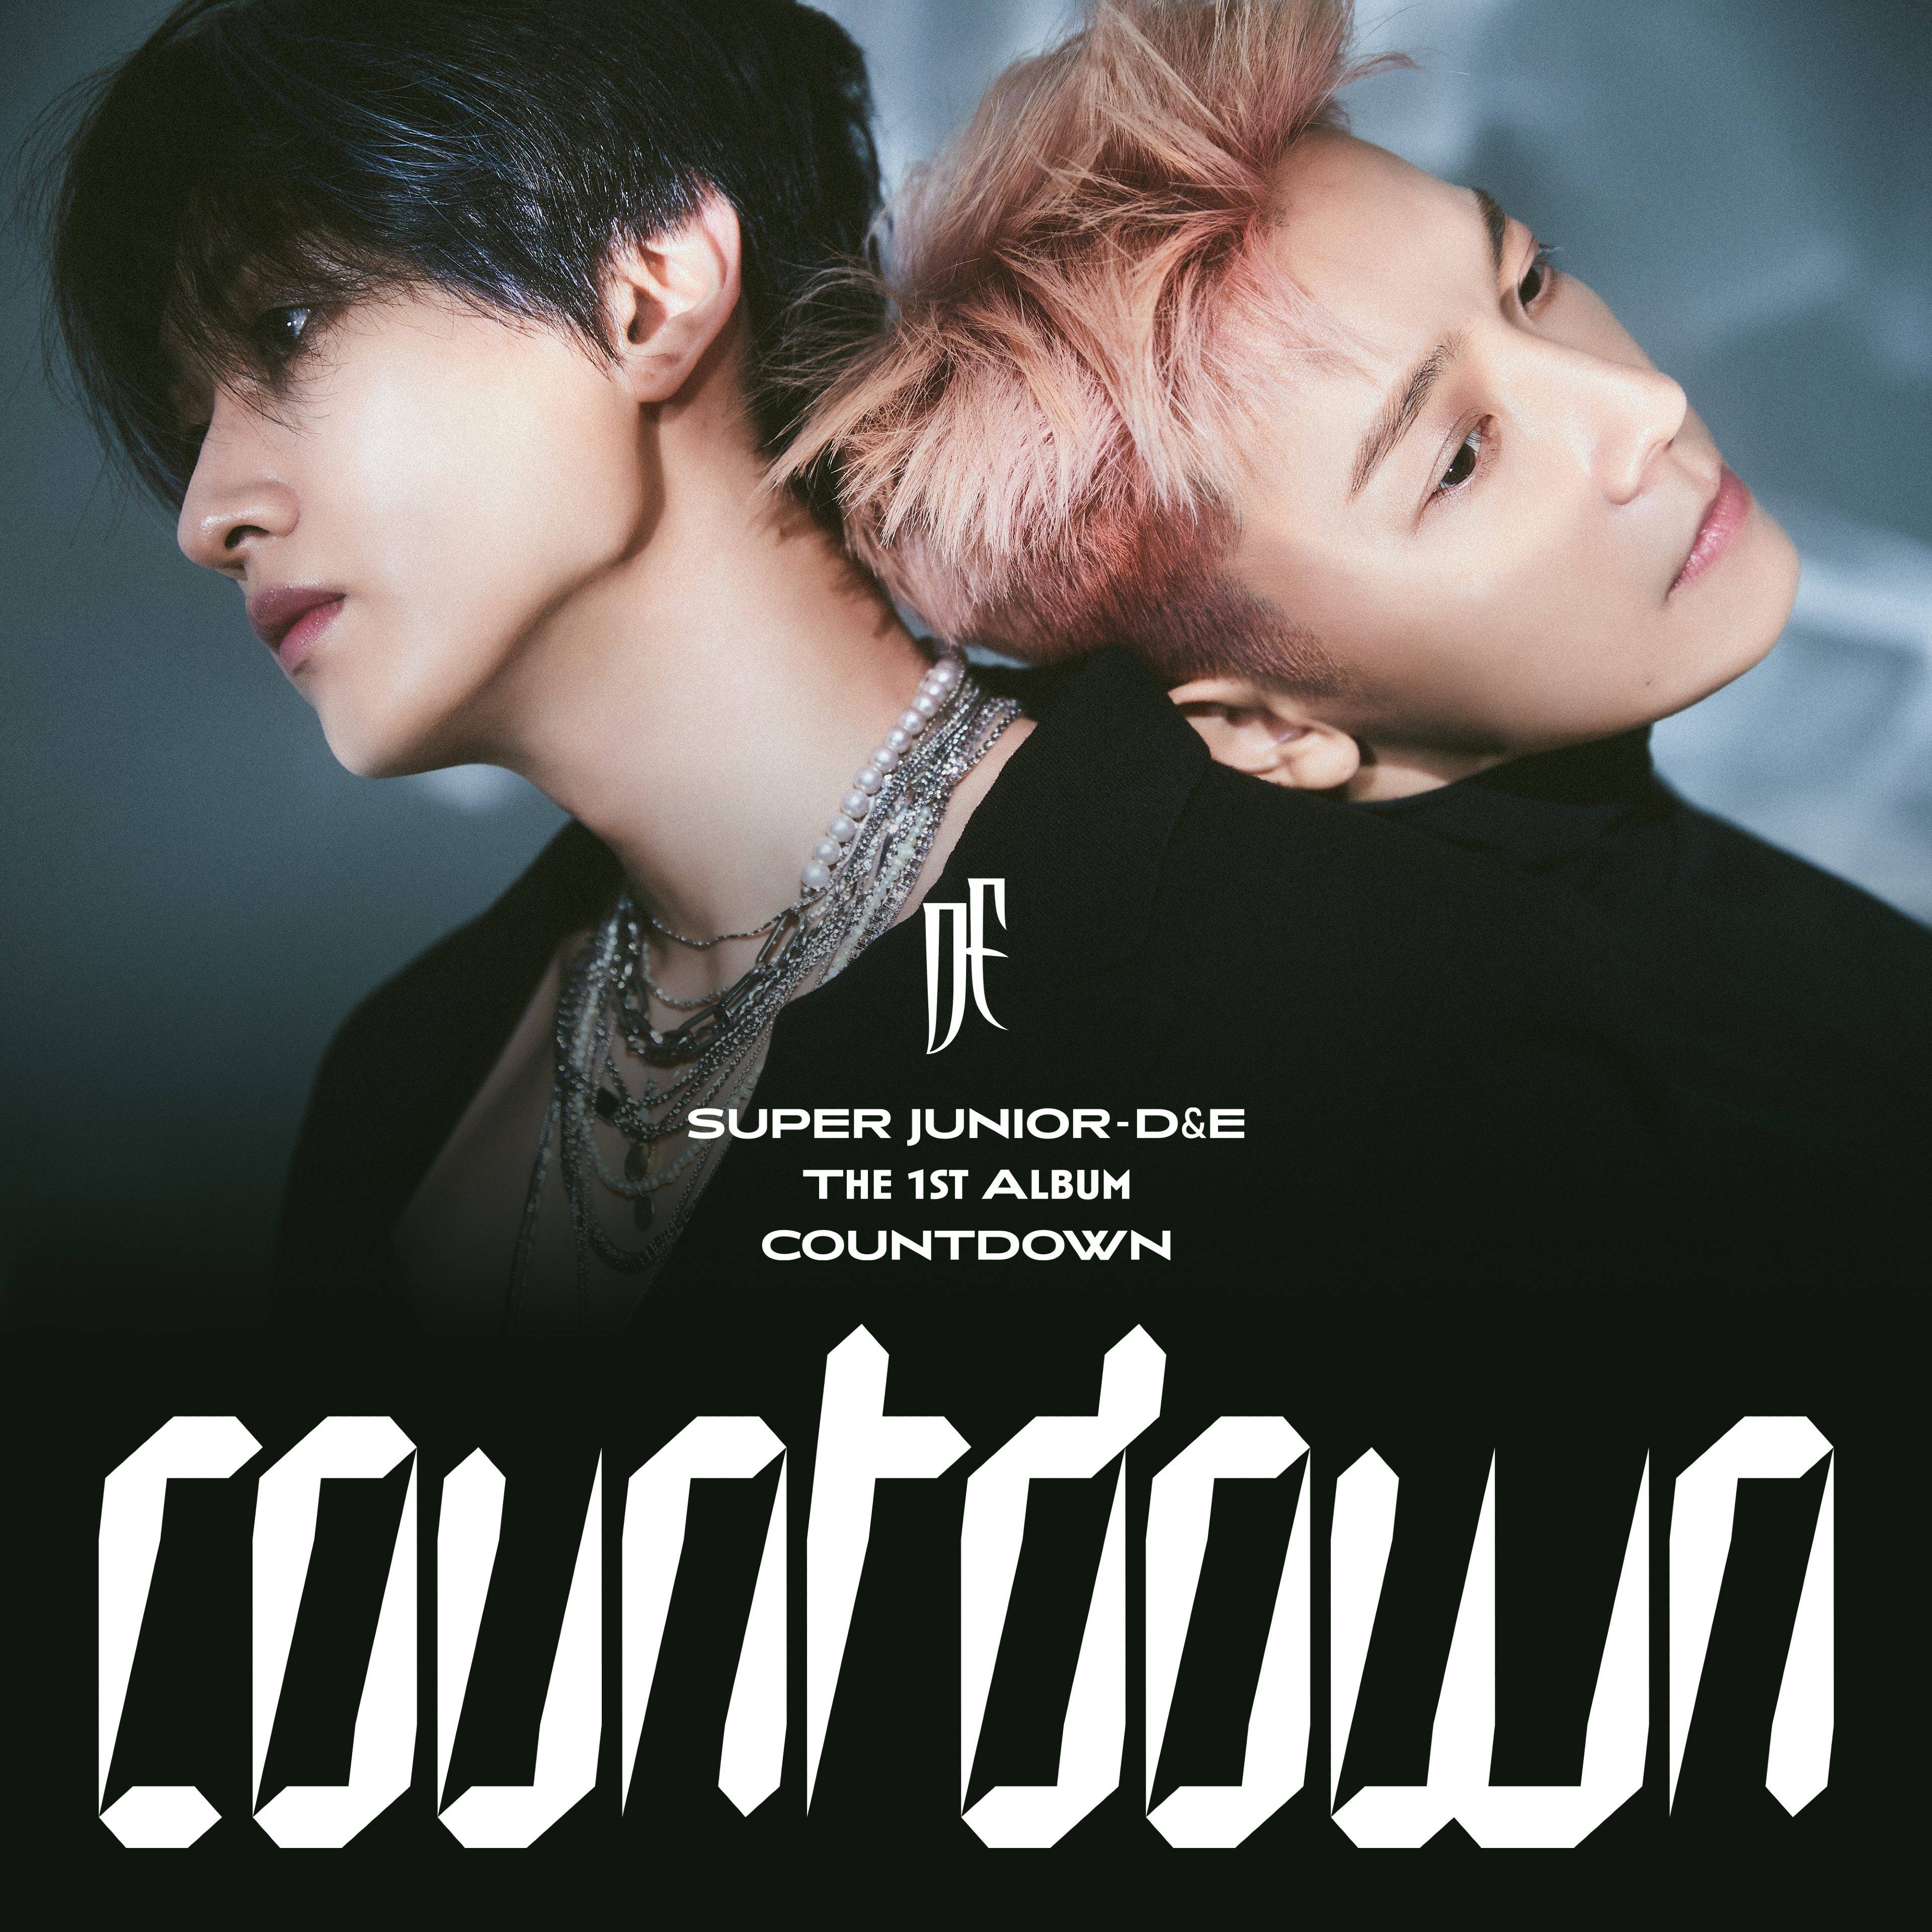 super junior-d&e正规专辑《countdown》封面图